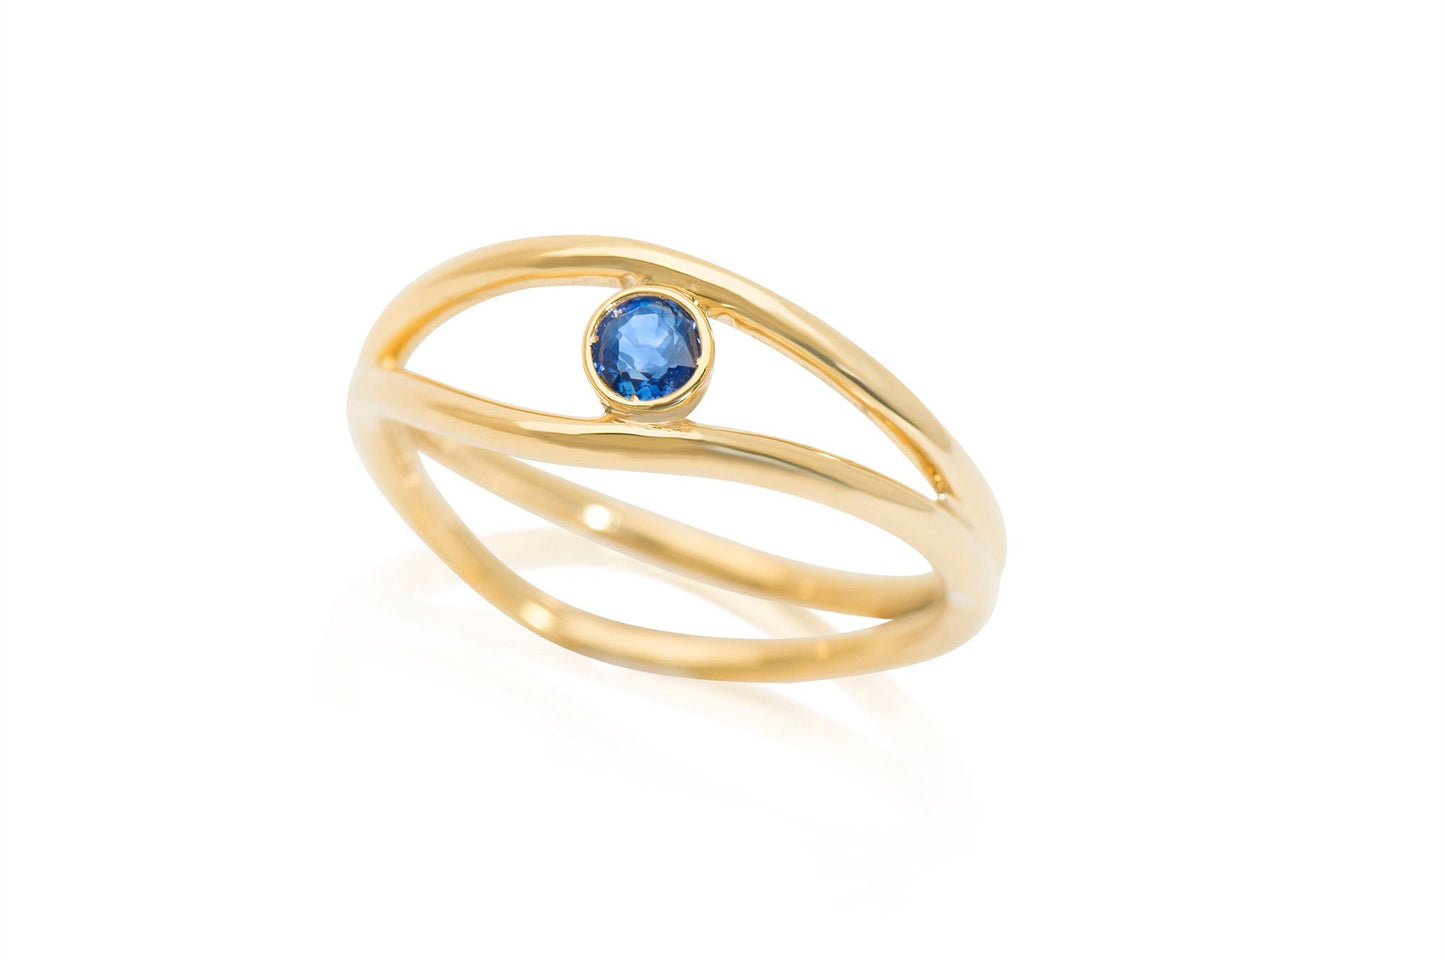 14k Gold Round Sapphire Wave Ring